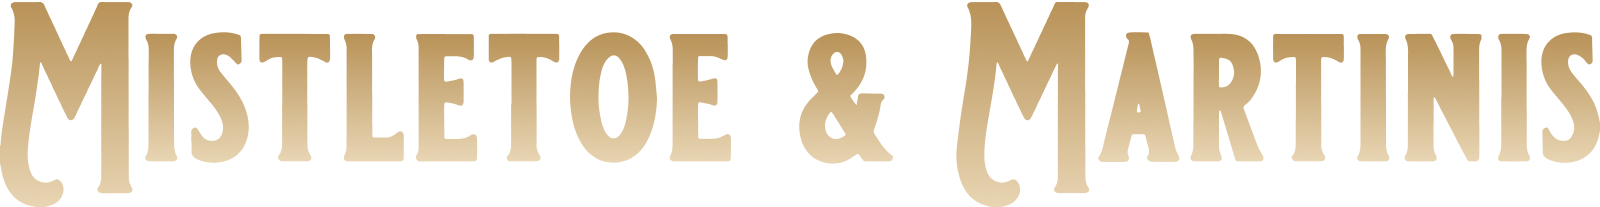 Mistletoe and Martinis logotype